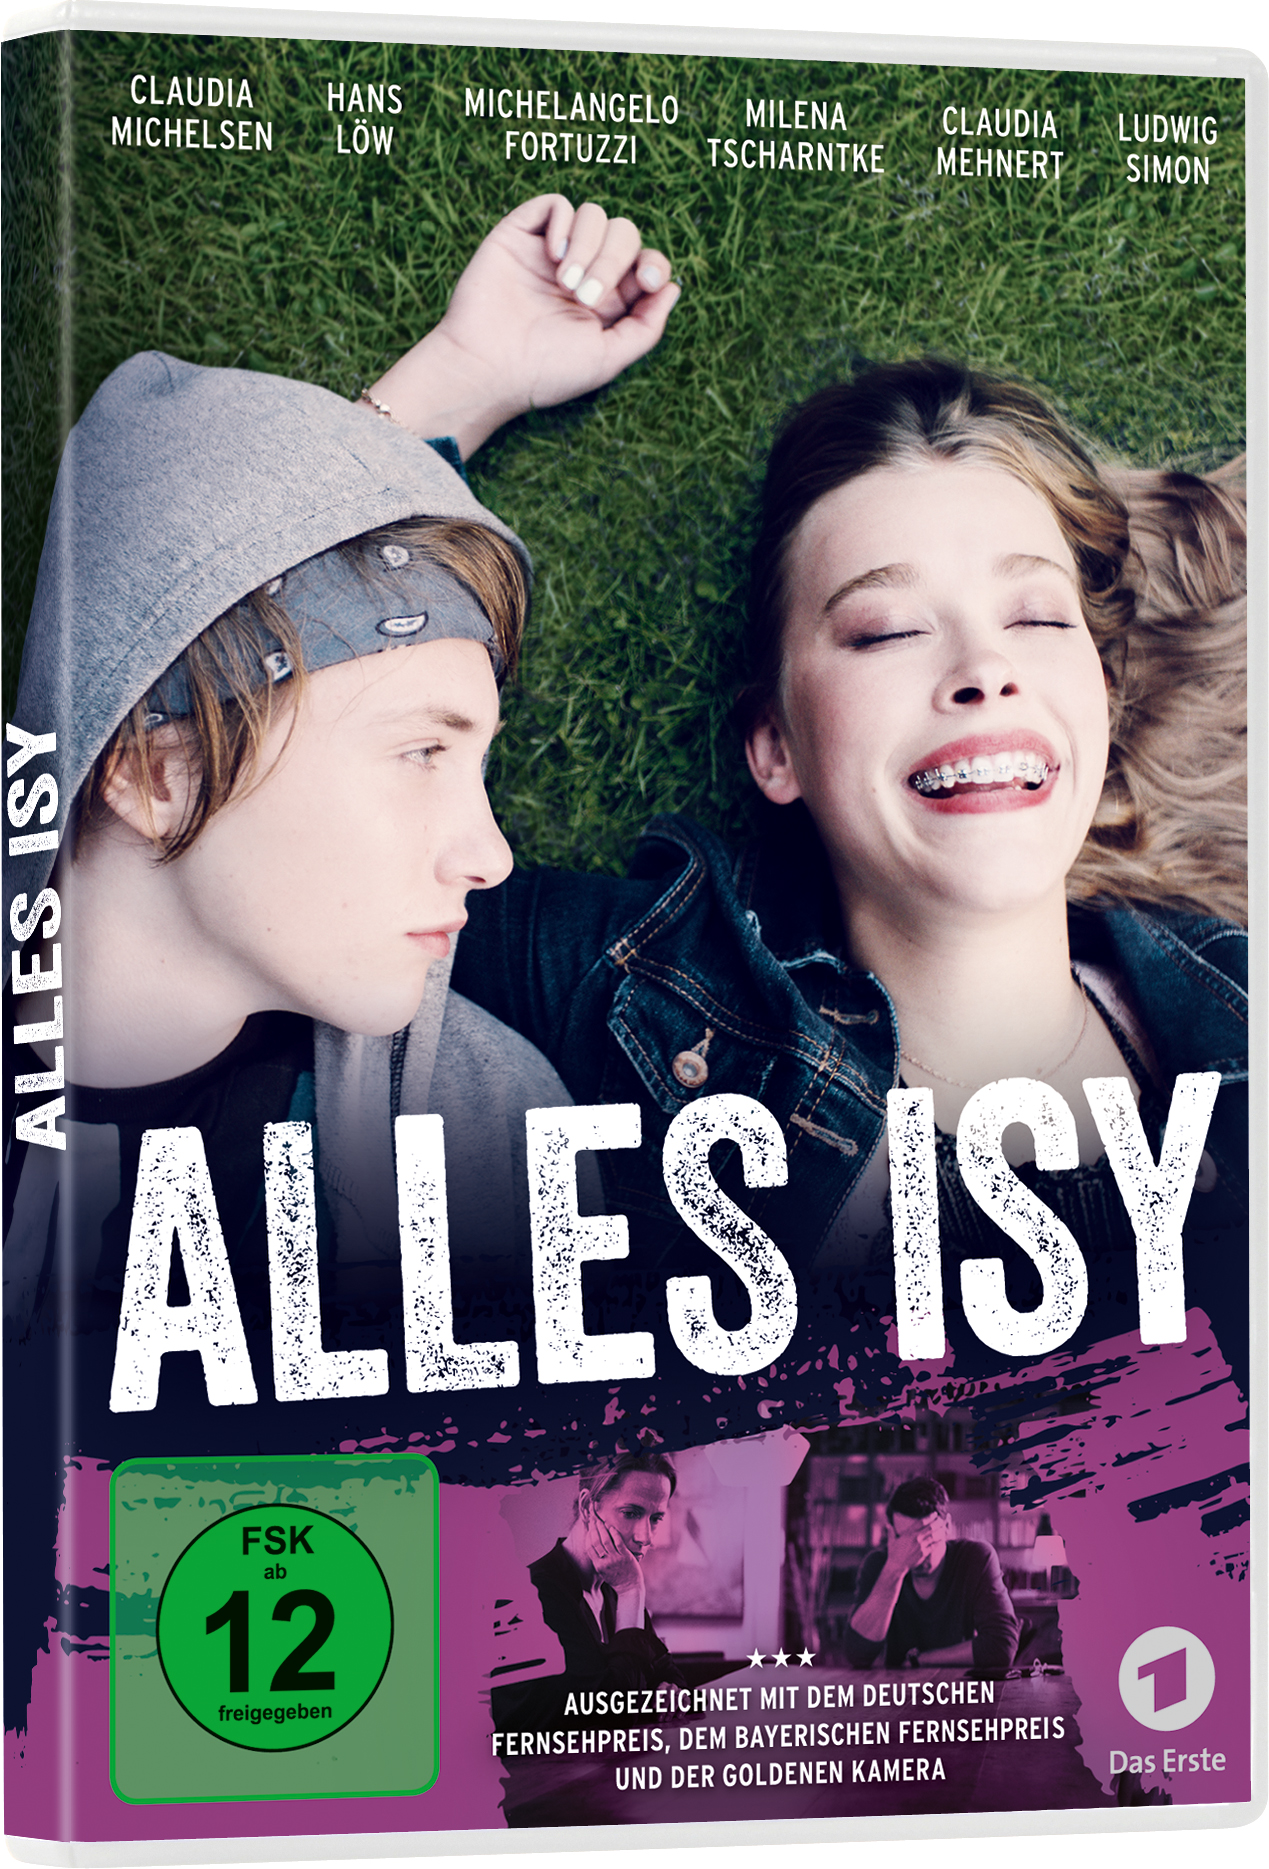 DVD Isy Alles